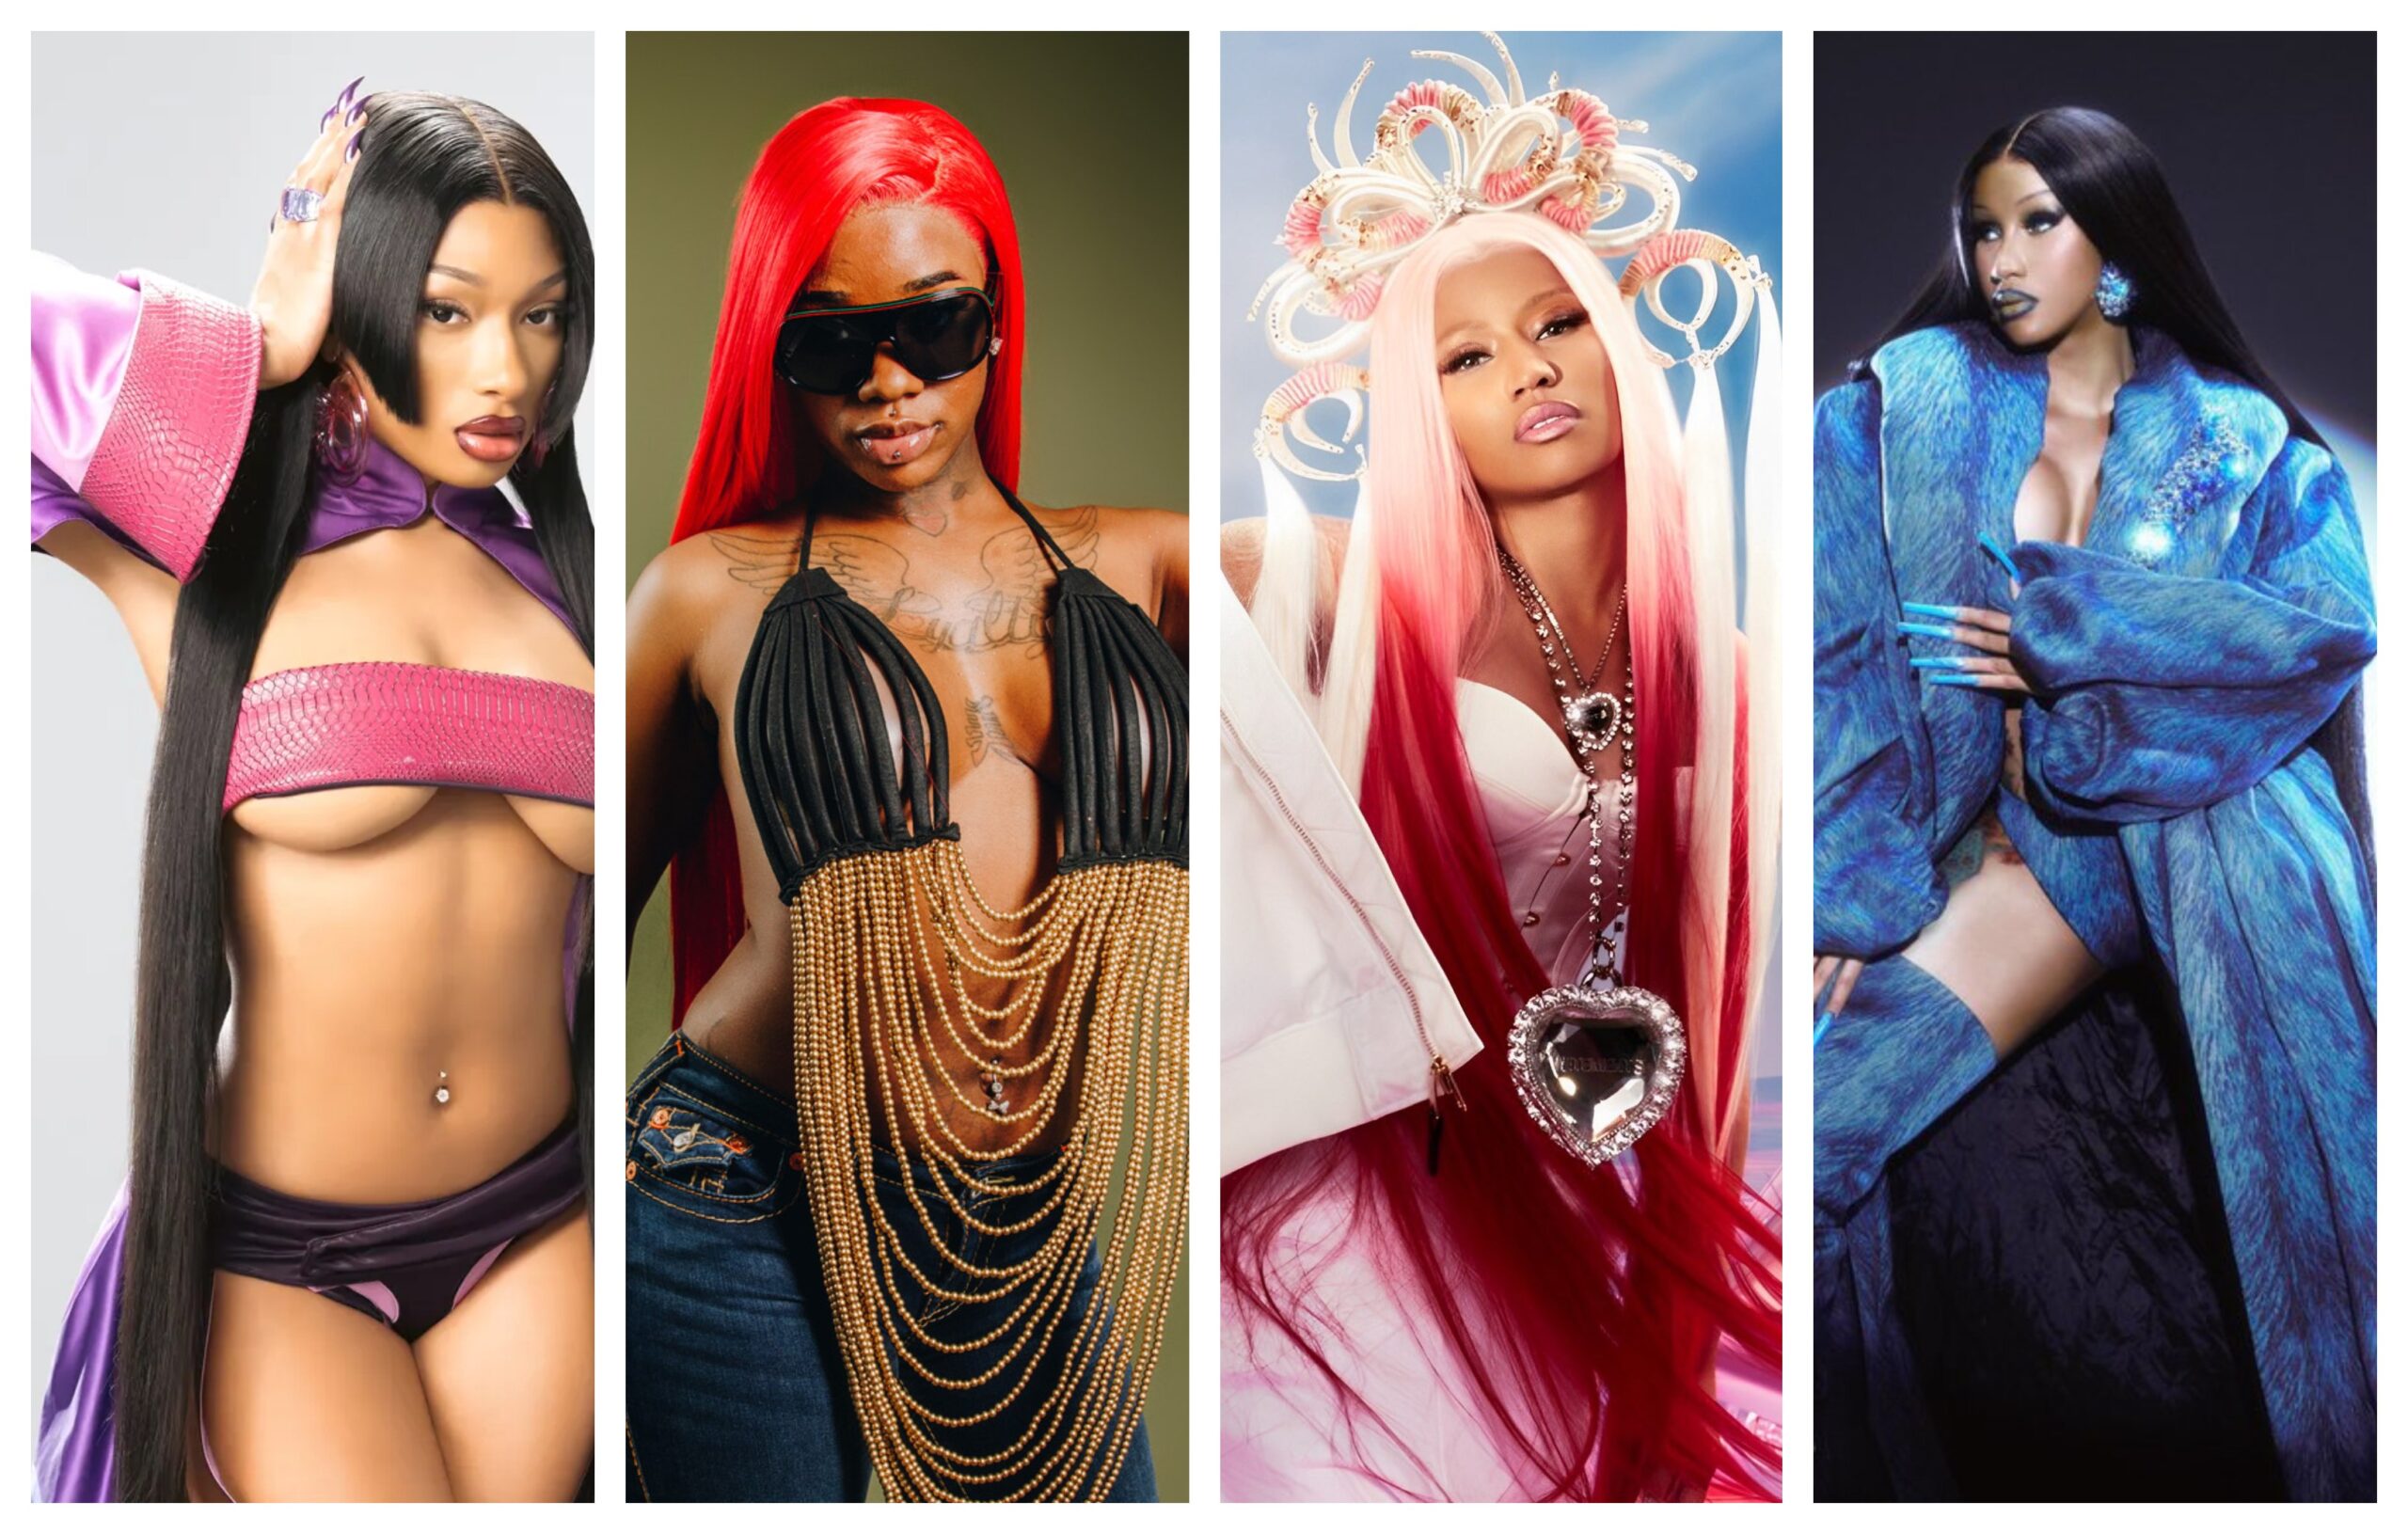 Nicki Minaj & Sexyy Red Top Cardi B, Megan Thee Stallion, & More on Billboard’s Hottest Female Rappers List